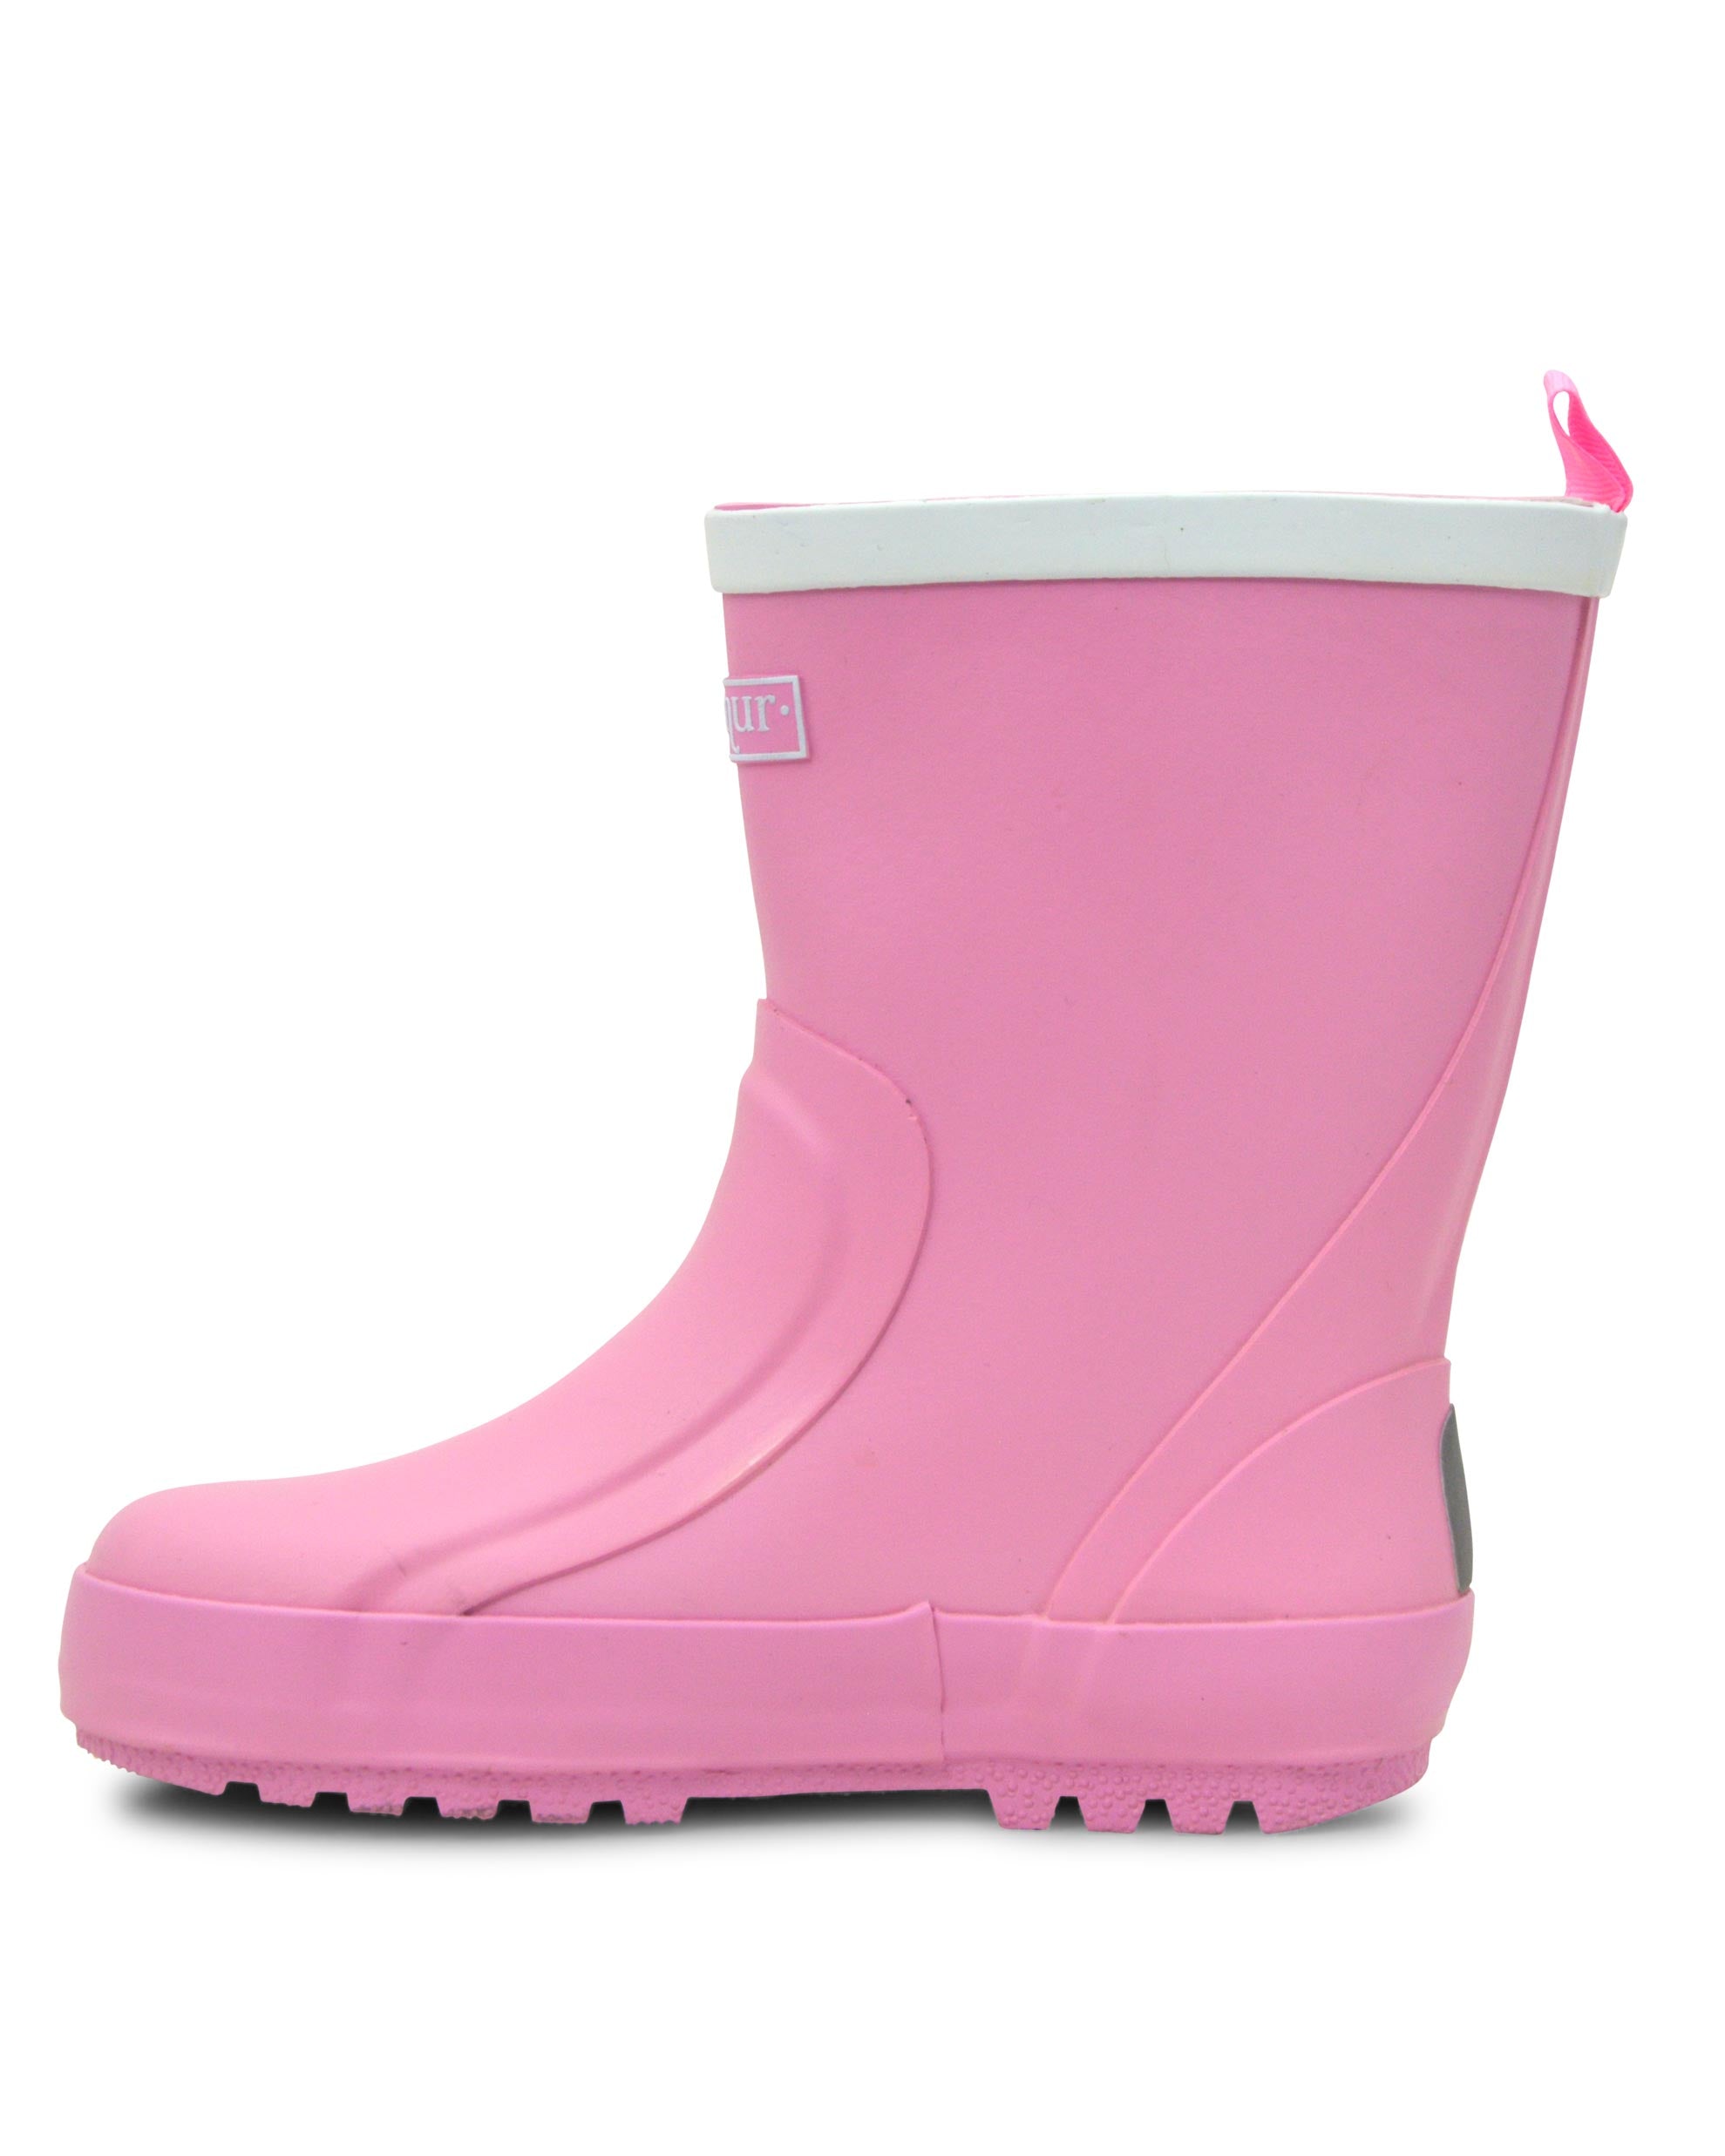 Splasher Pink Kids Gumboots